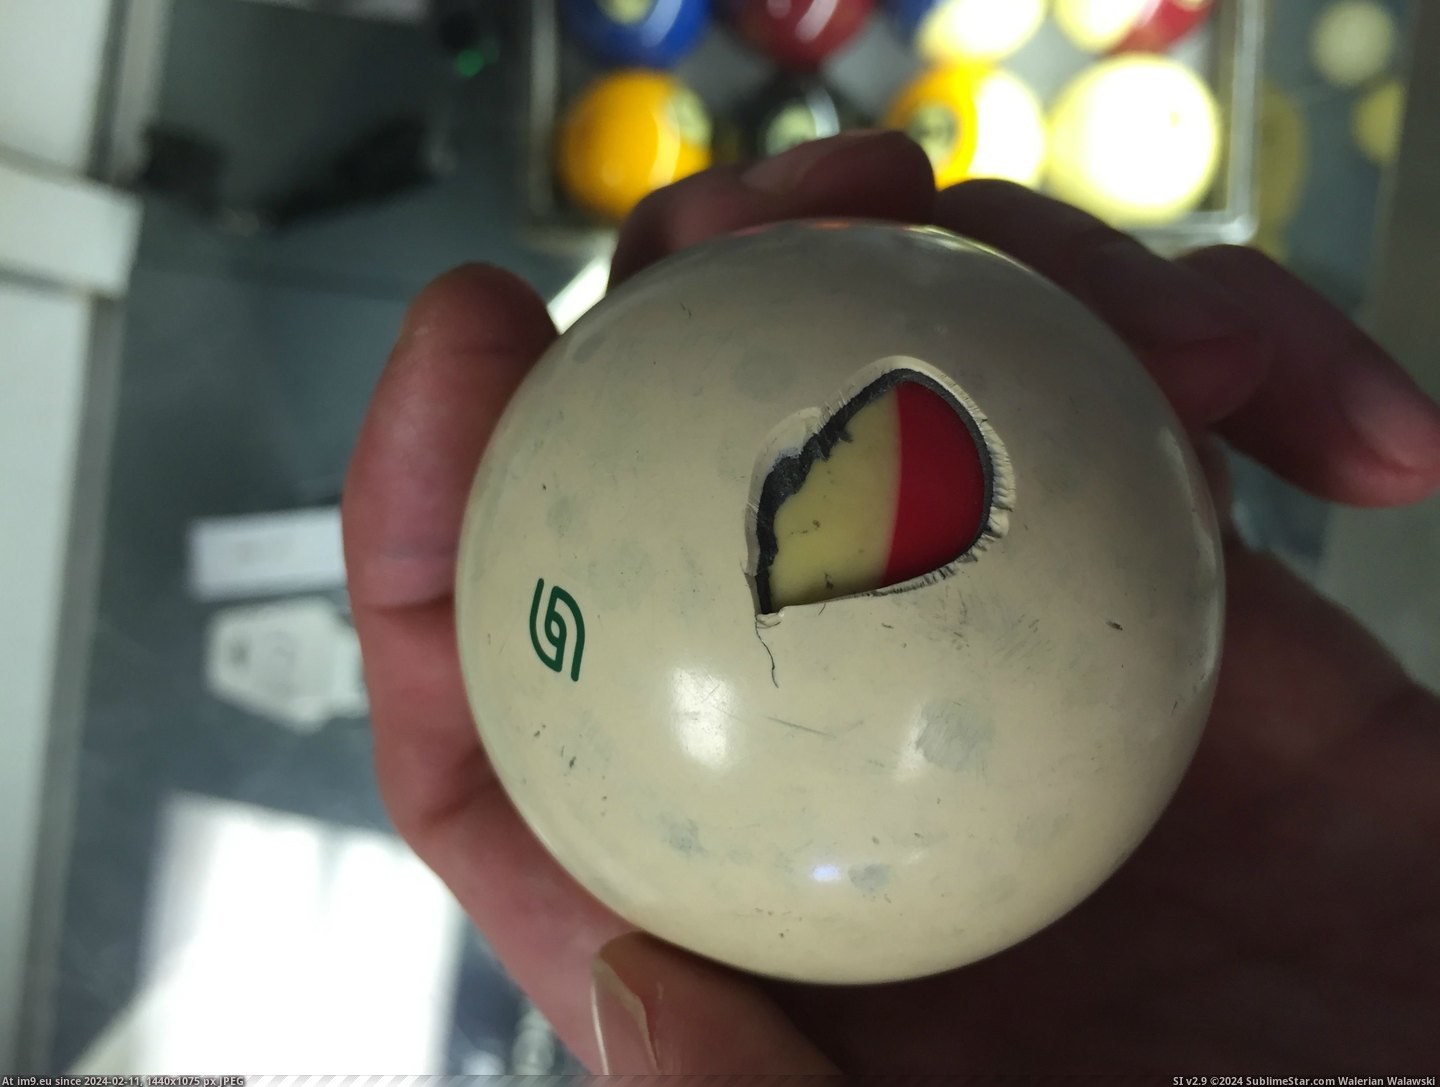 [Mildlyinteresting] Cracked cue ball reveals another ball hidden inside (in My r/MILDLYINTERESTING favs)